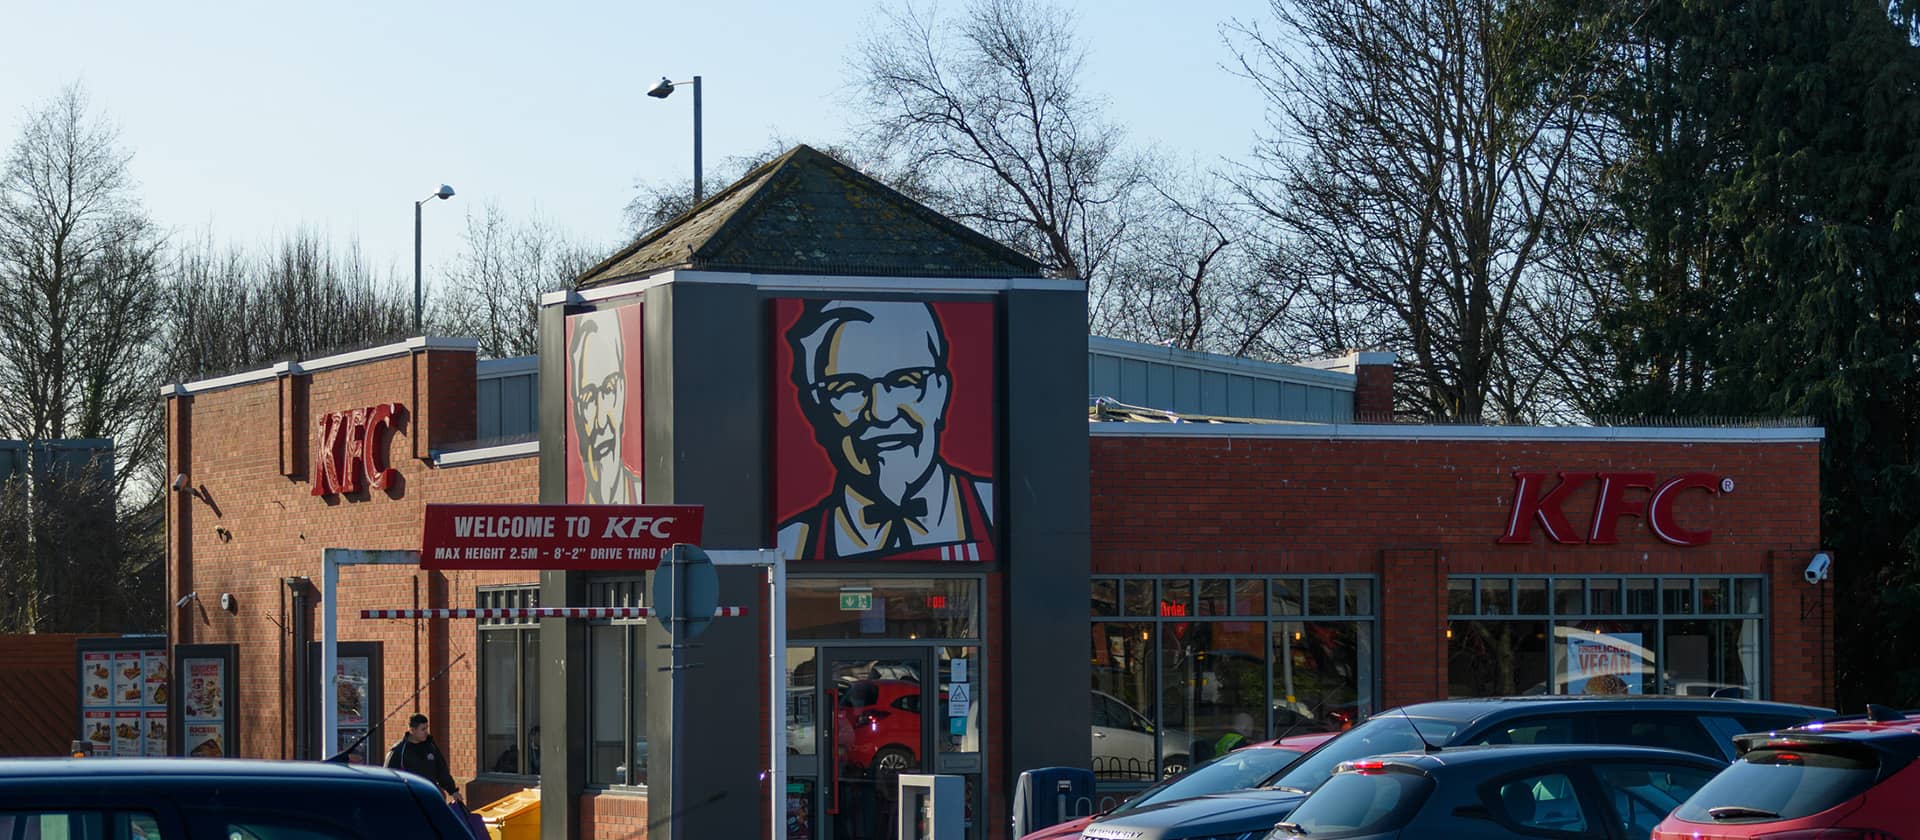 KFC restaurant in the UK